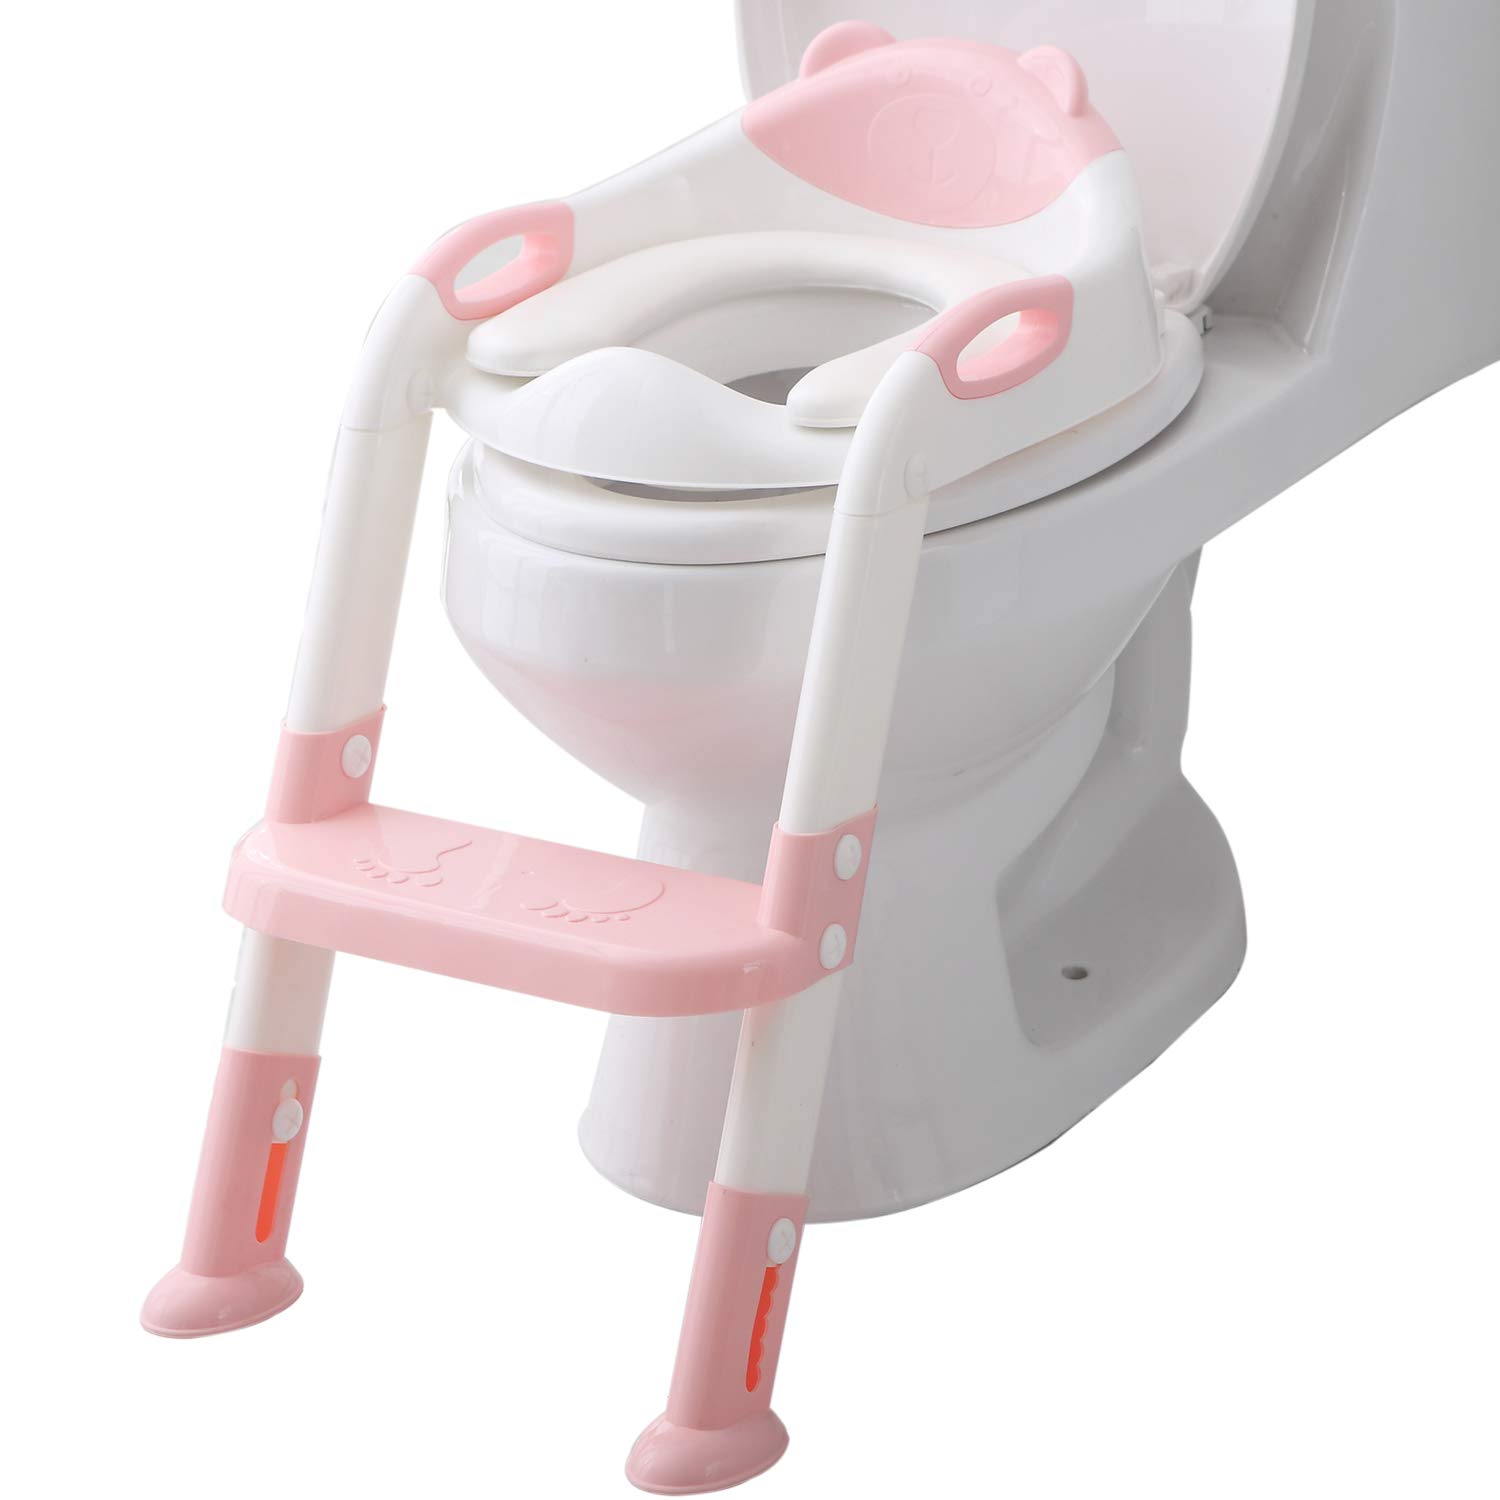 Fedicelly Potty Training Seat Ladder Toddler ,Potty Seat Toilet Boys Girls,Adjustable Kids Toilet Training Seat (Pink)